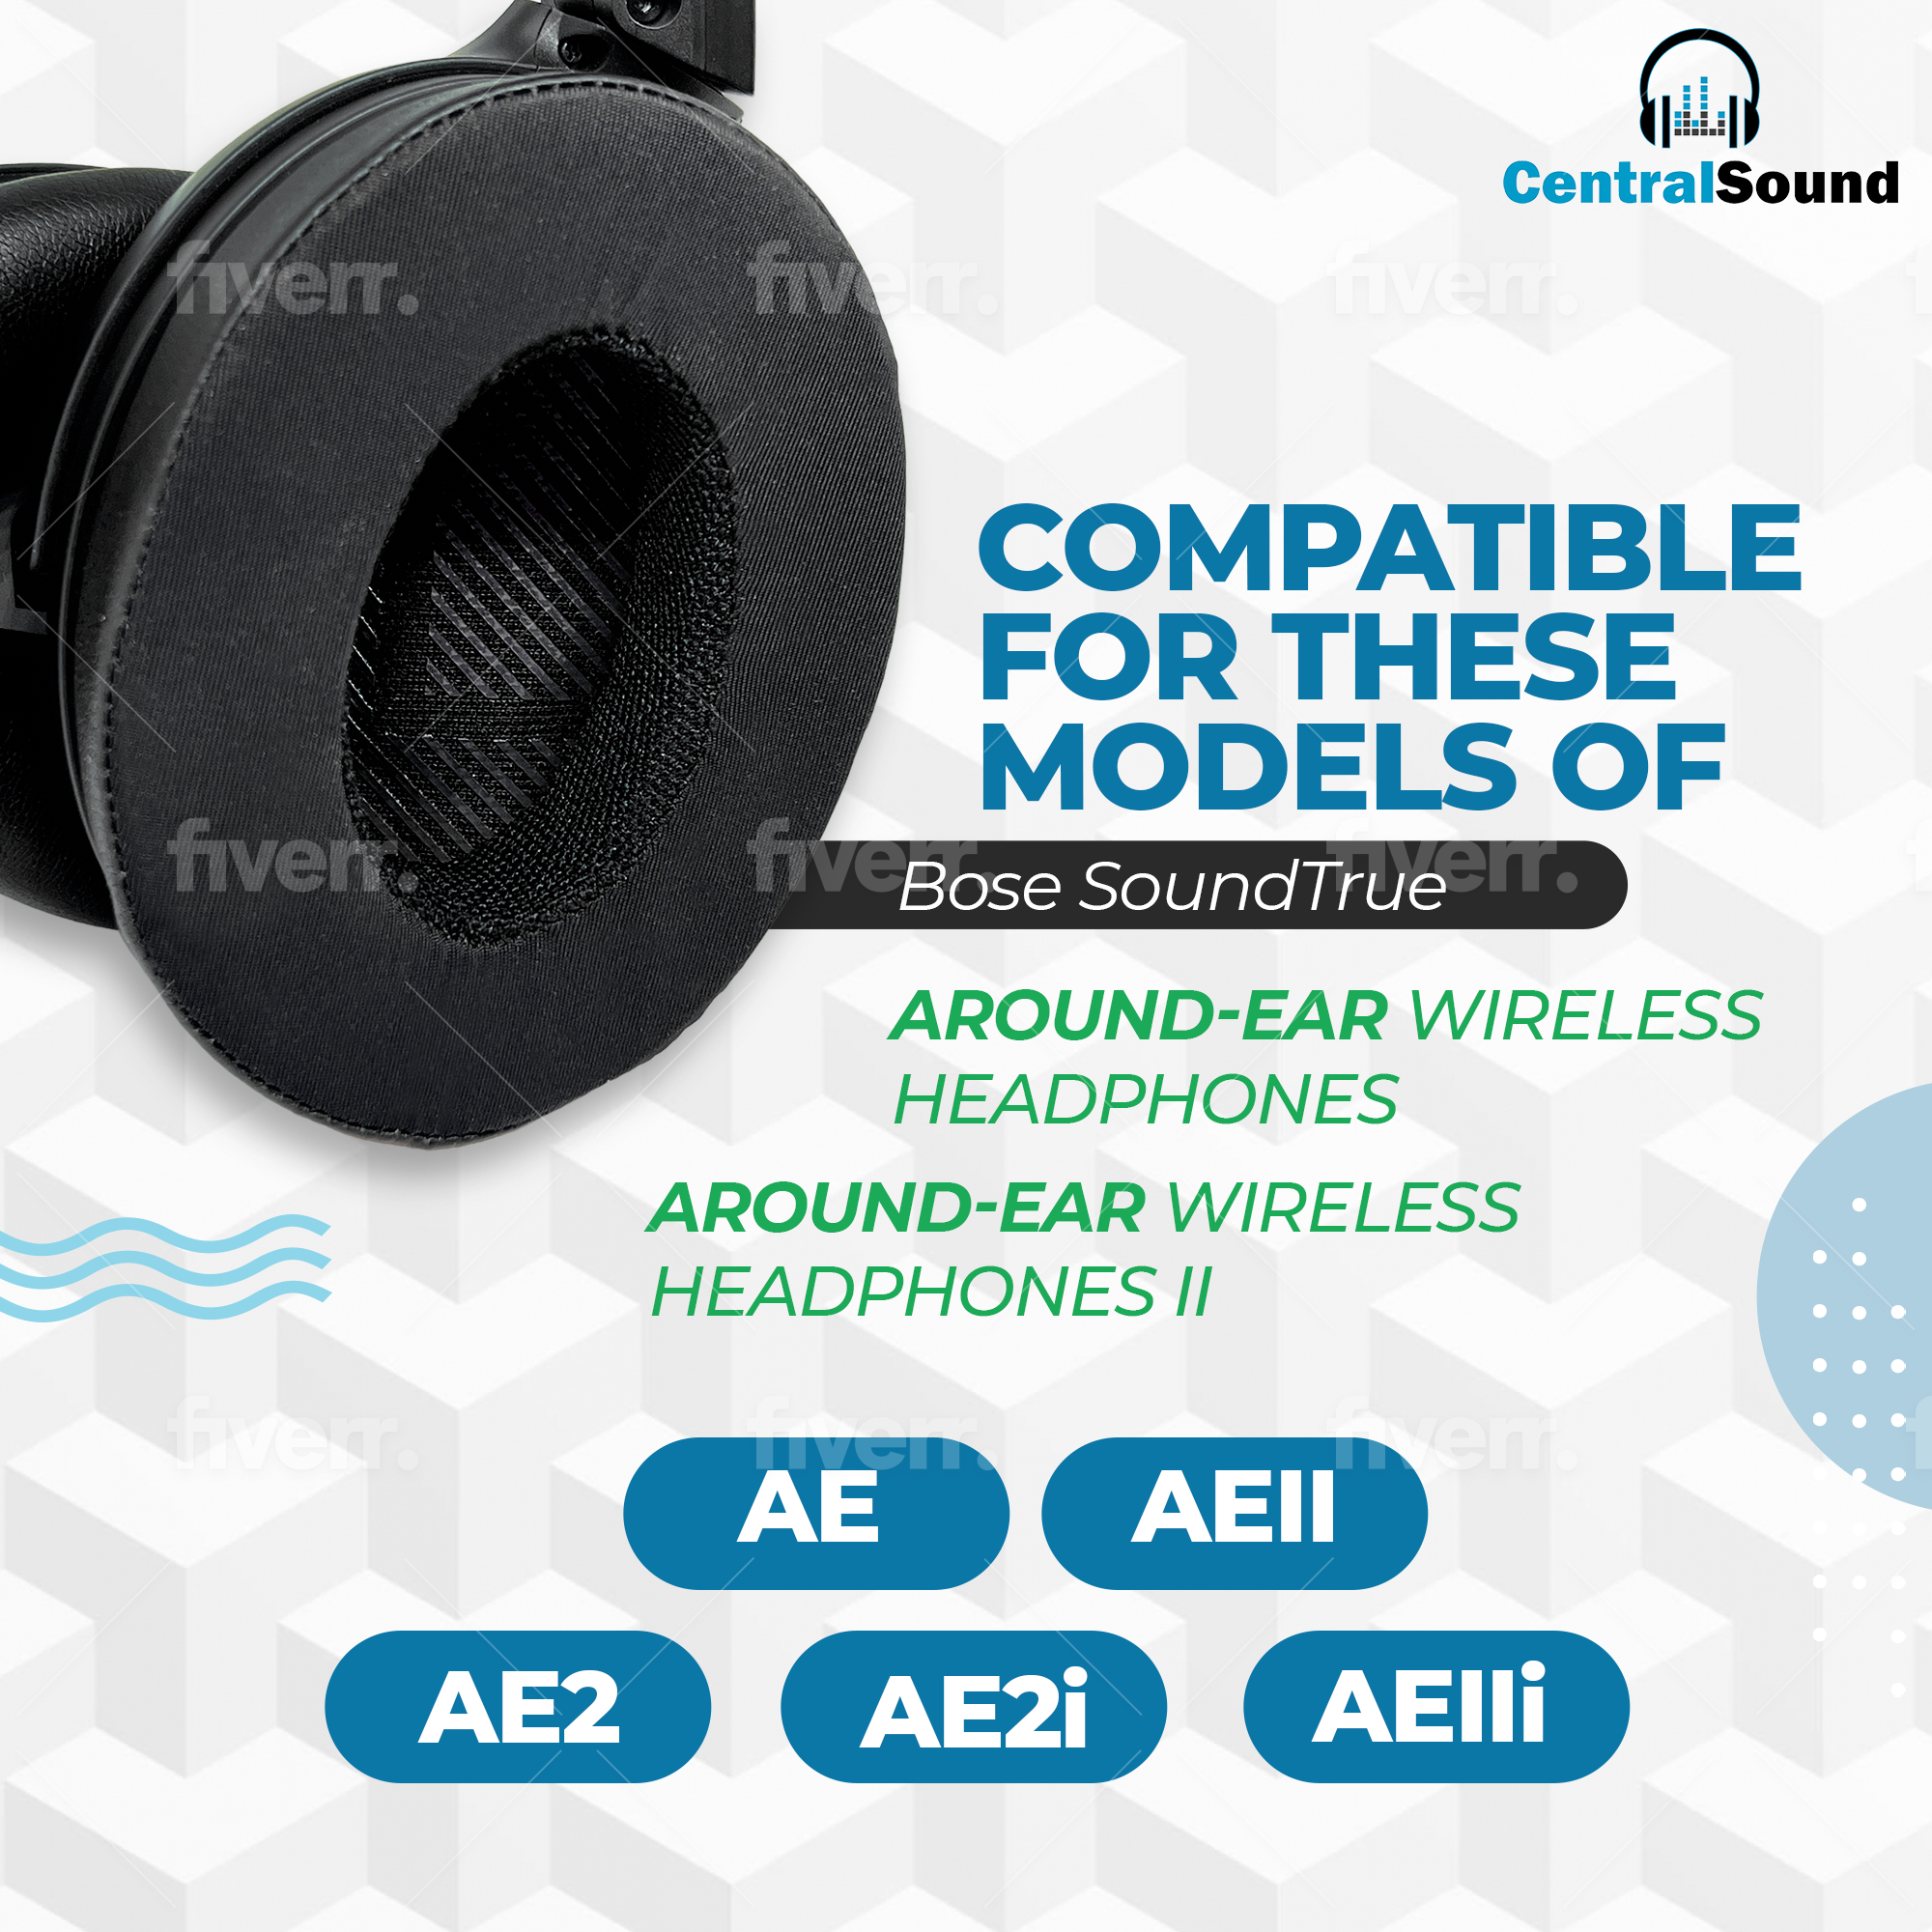 Bose SoundLink AE